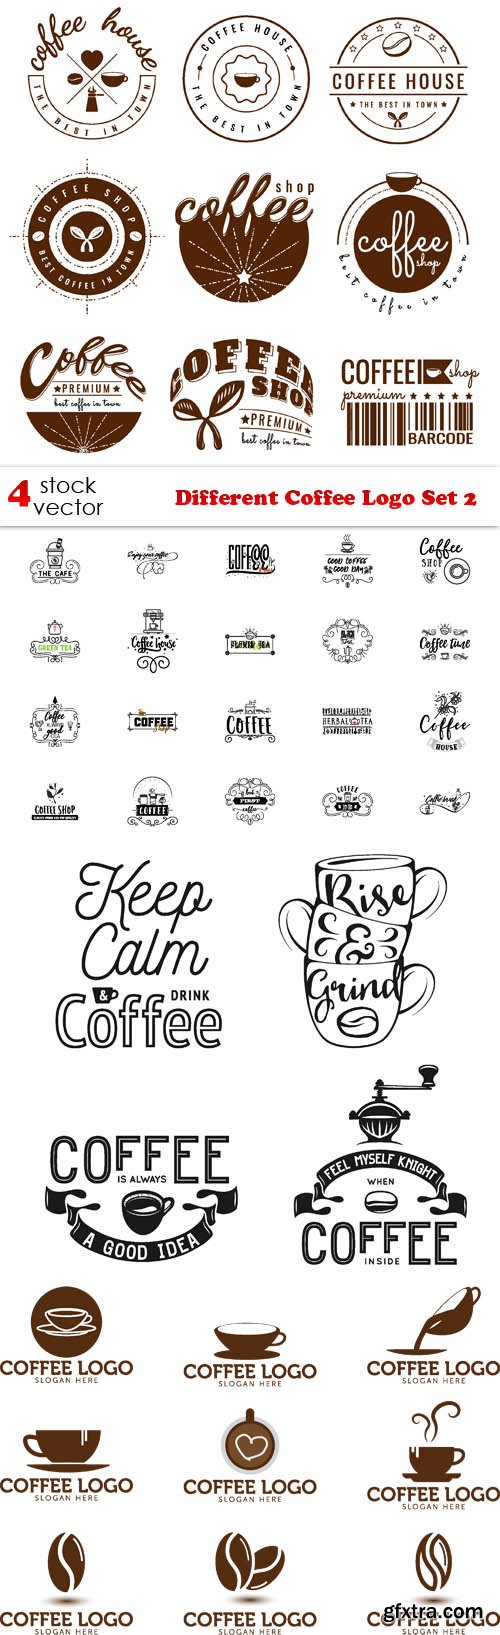 Vectors - Different Coffee Logo Set 2